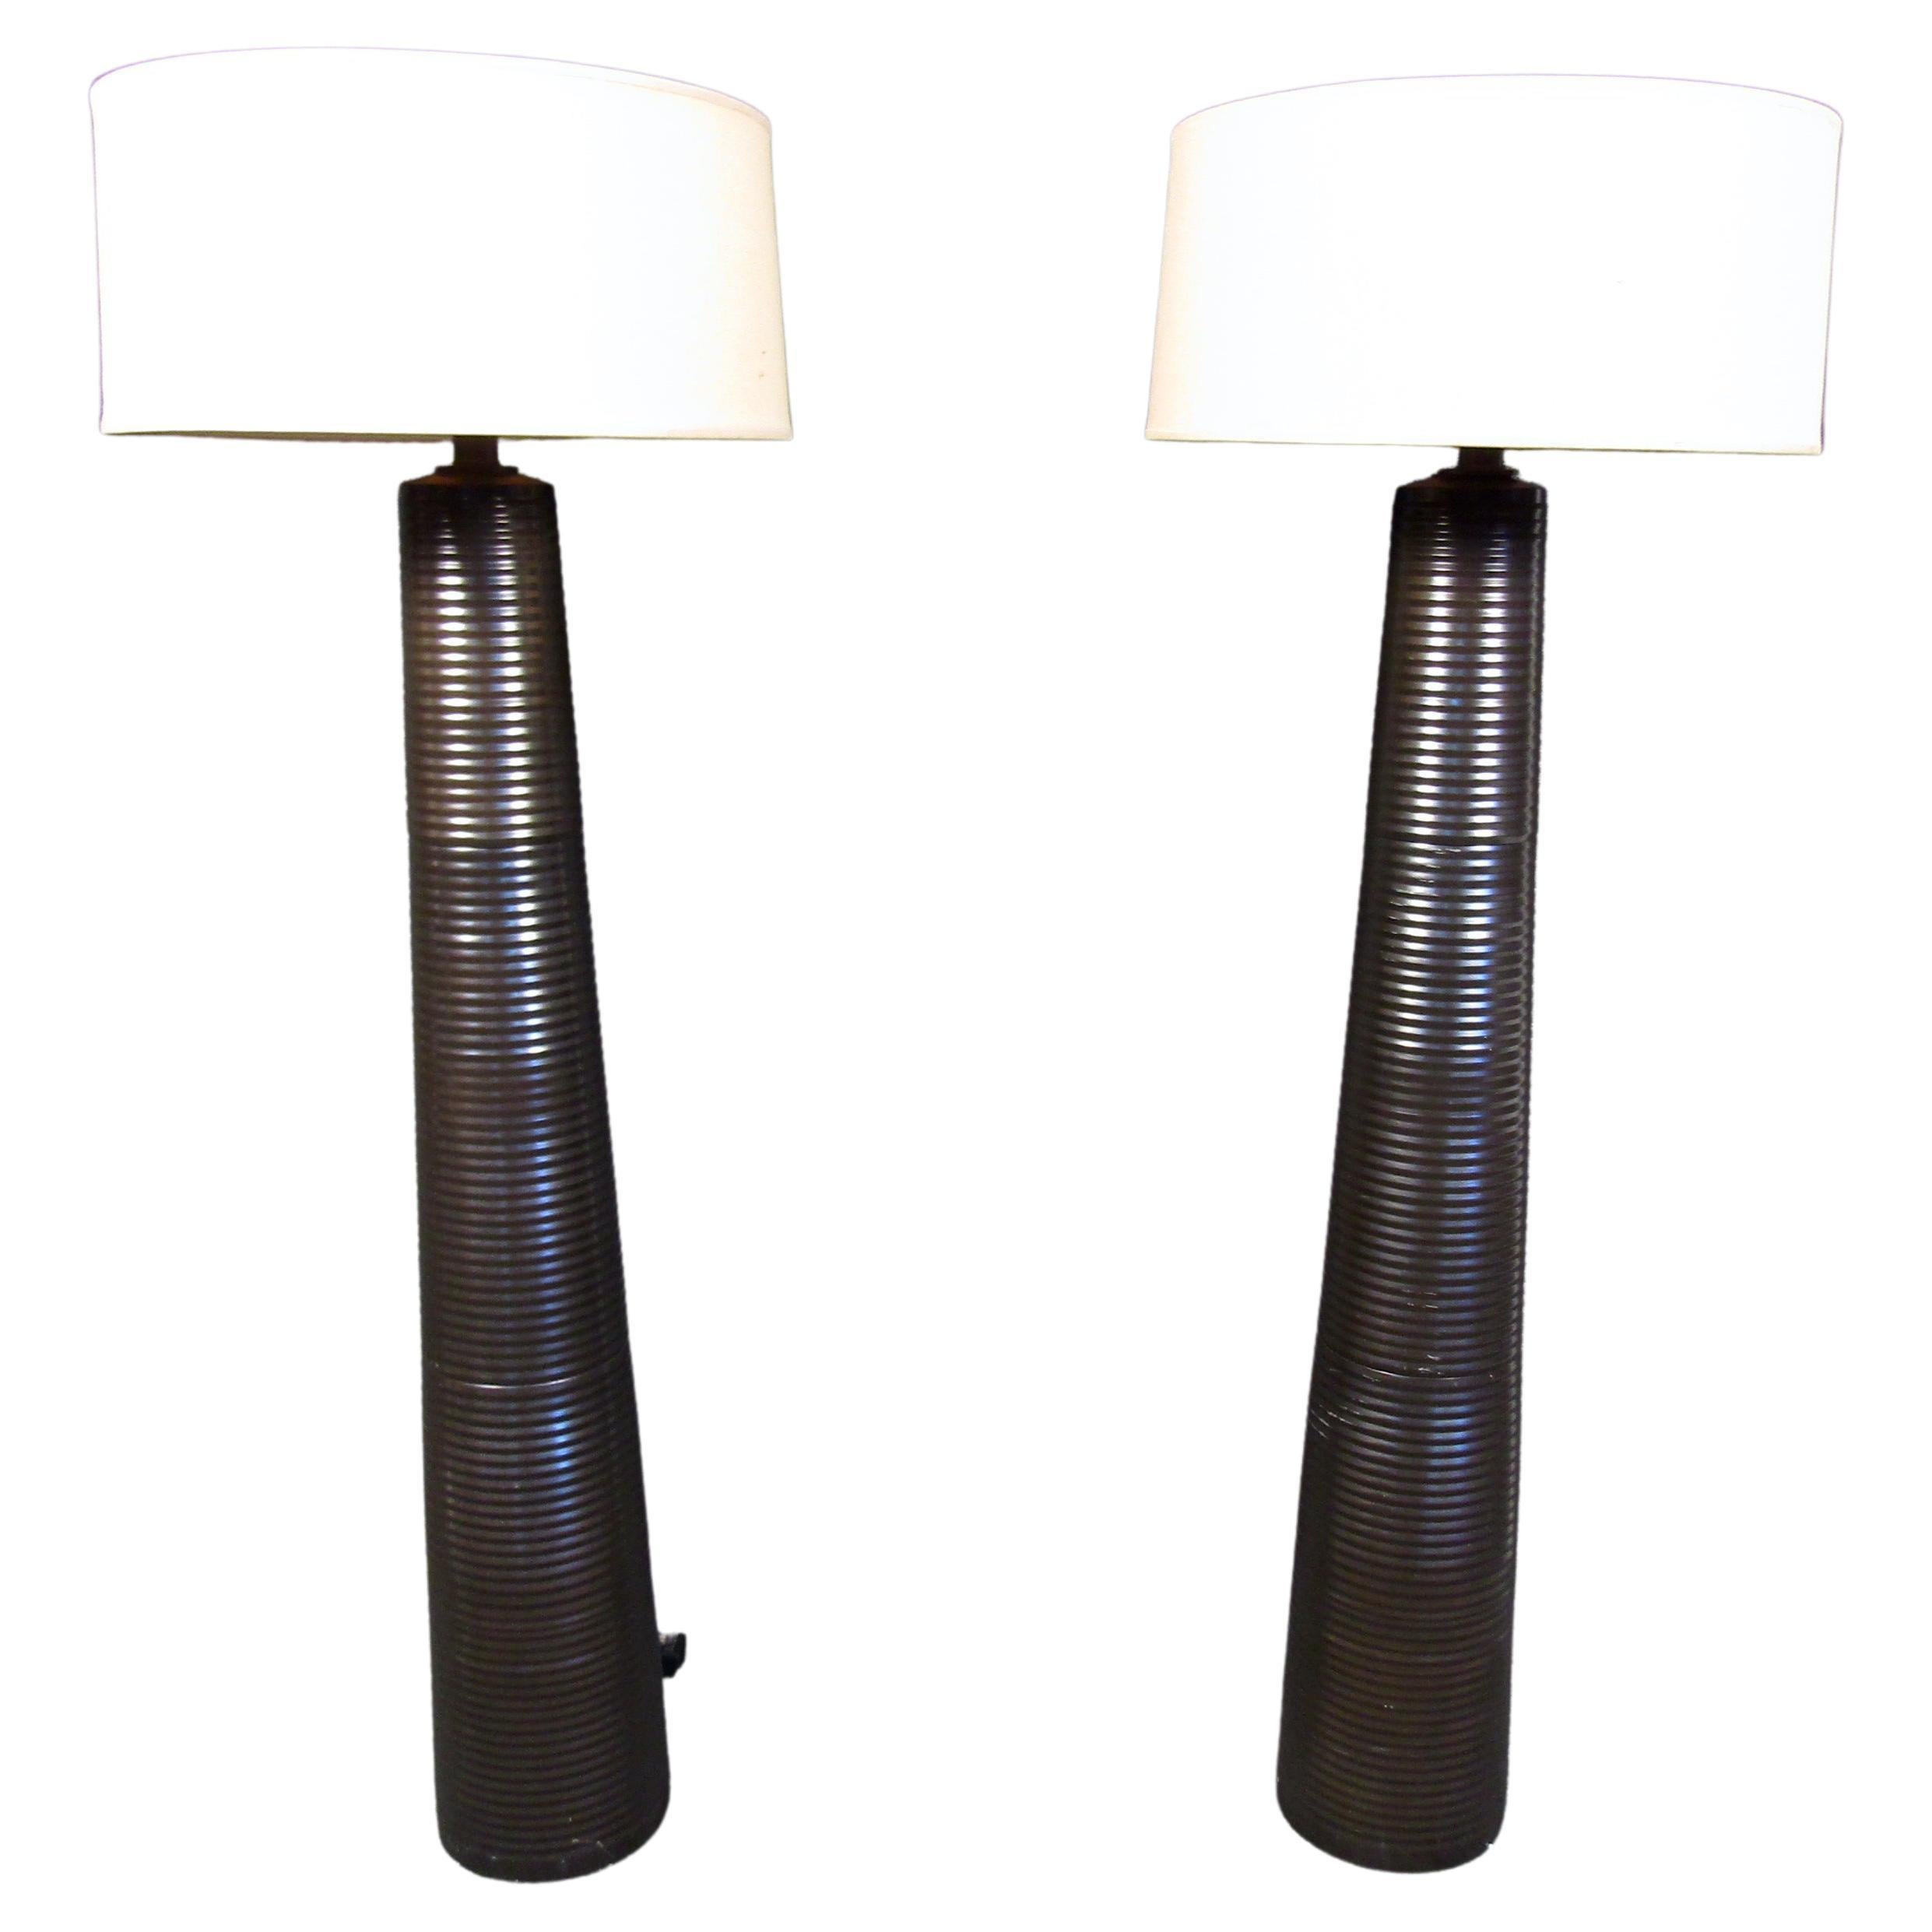 Pair of Mid-Century Modern Floor Lamps